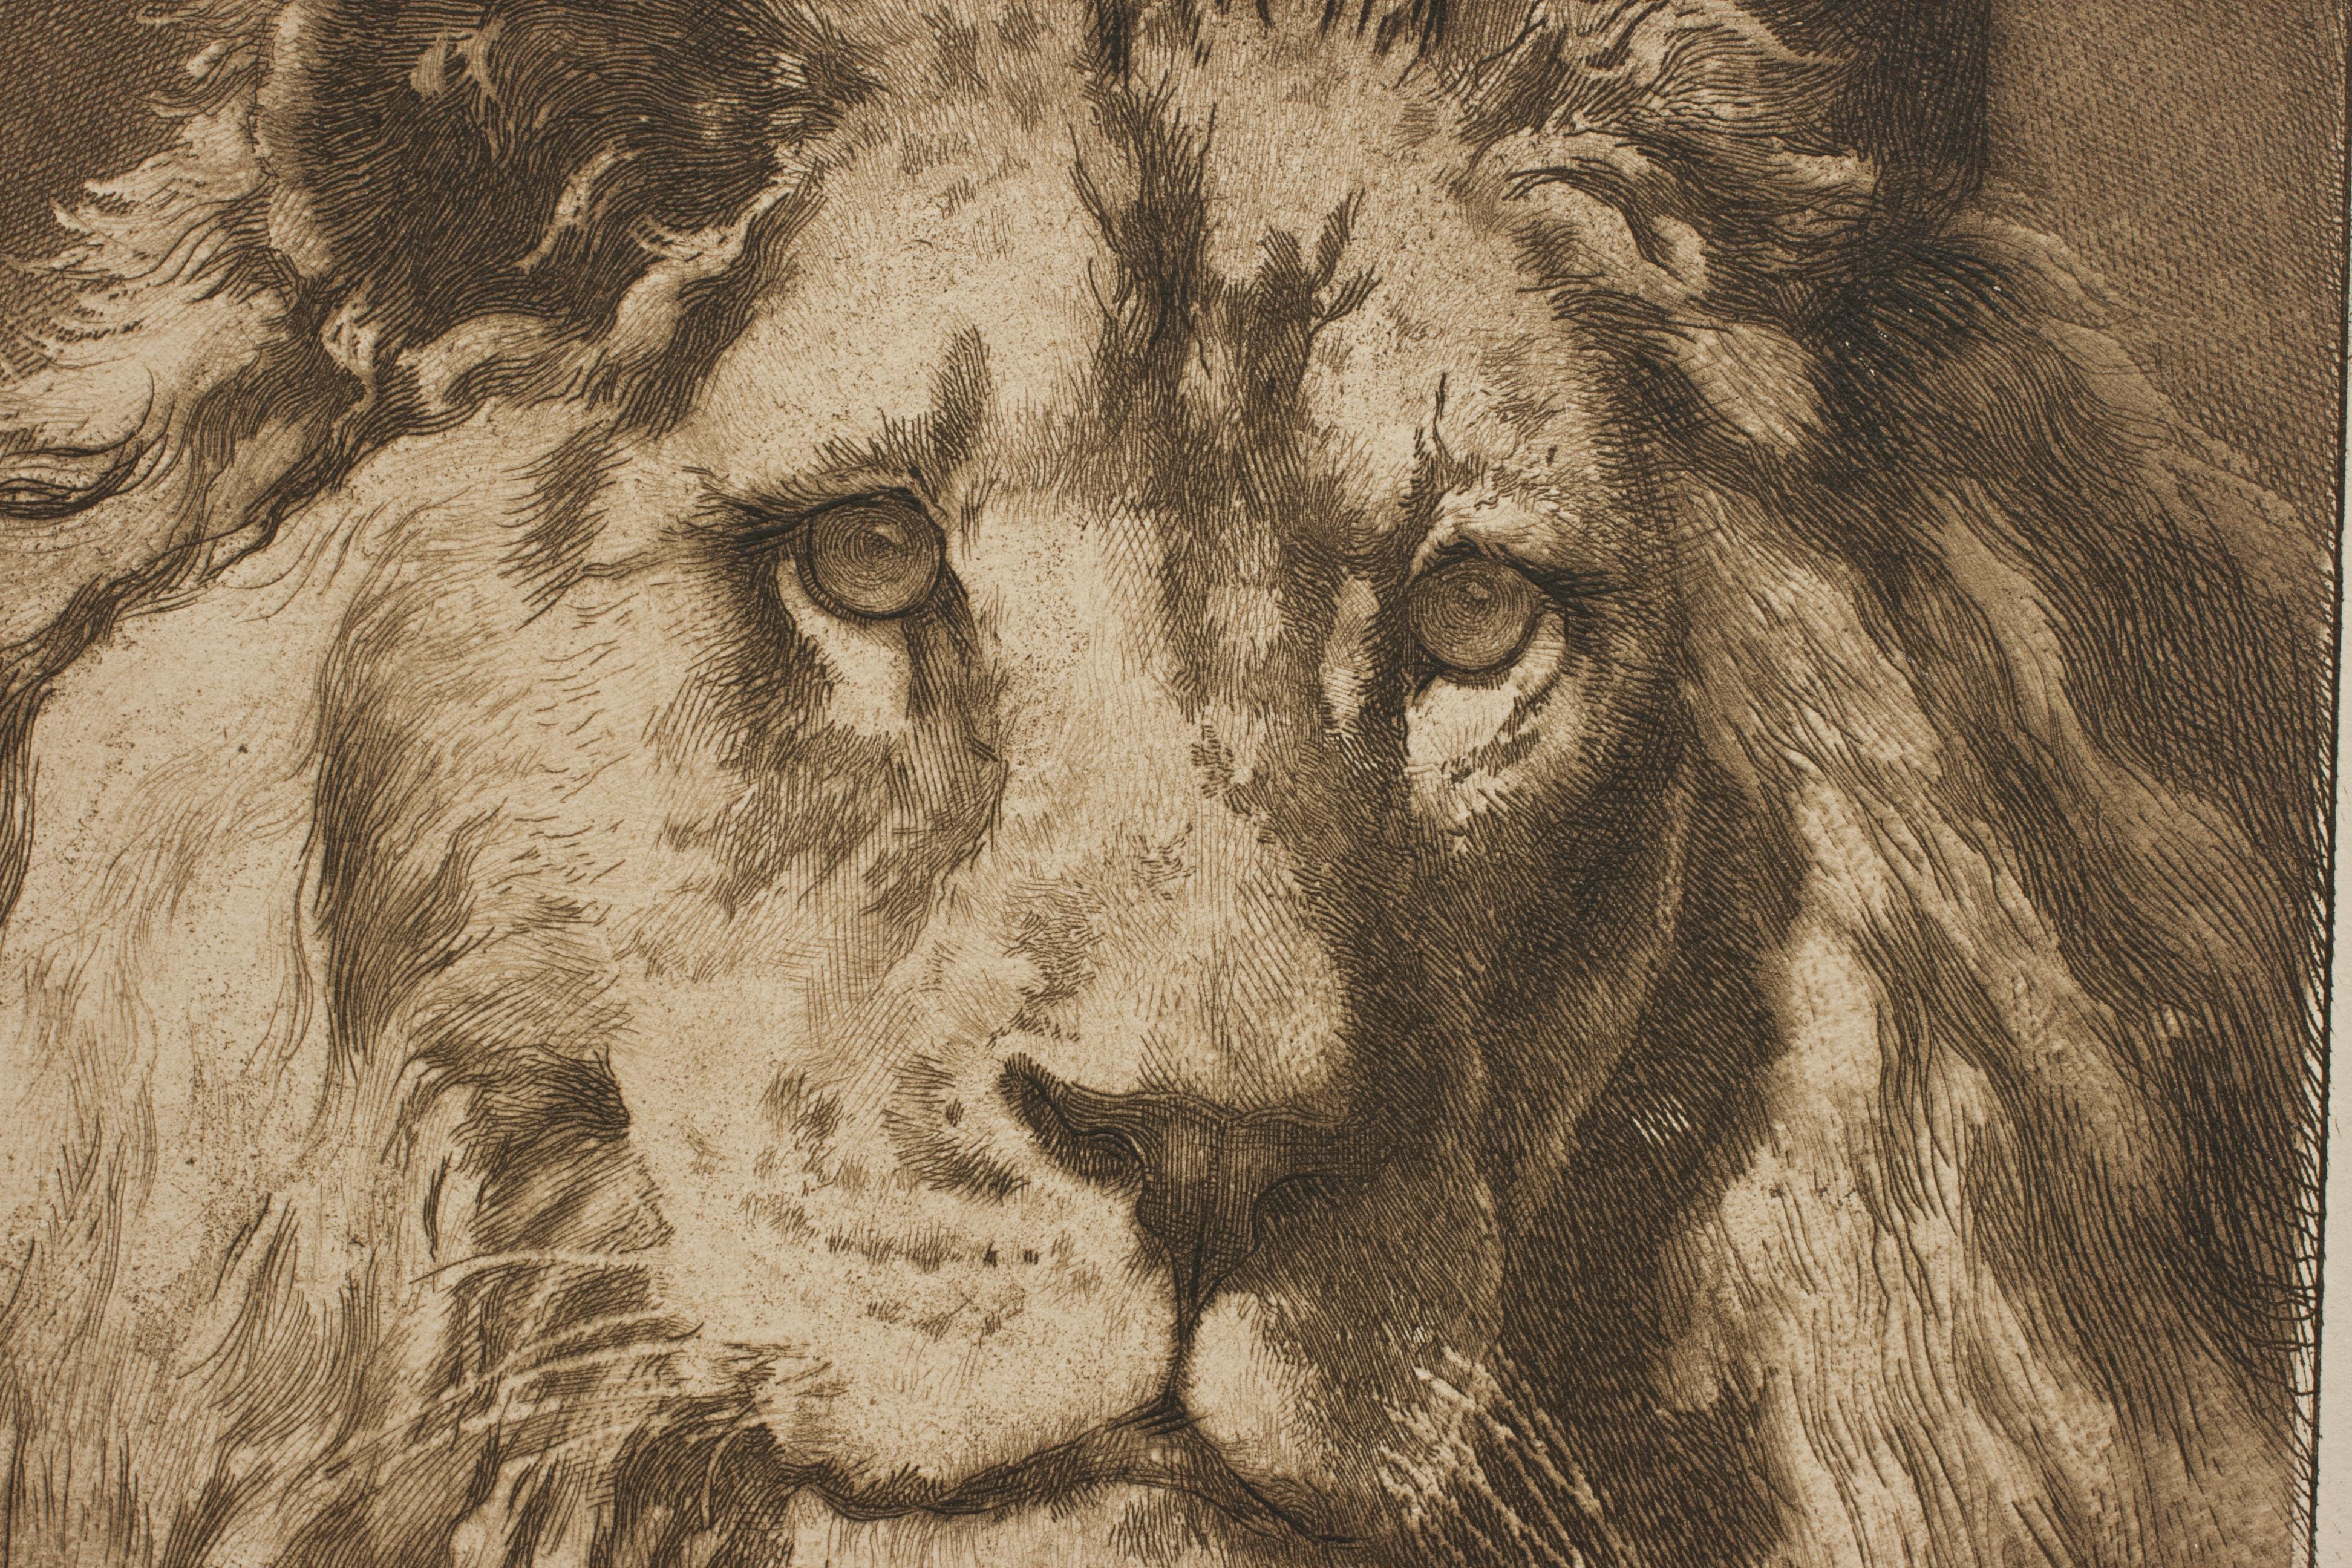 Sporting Art Lion Print by Herbert Dicksee, His Royal Highness